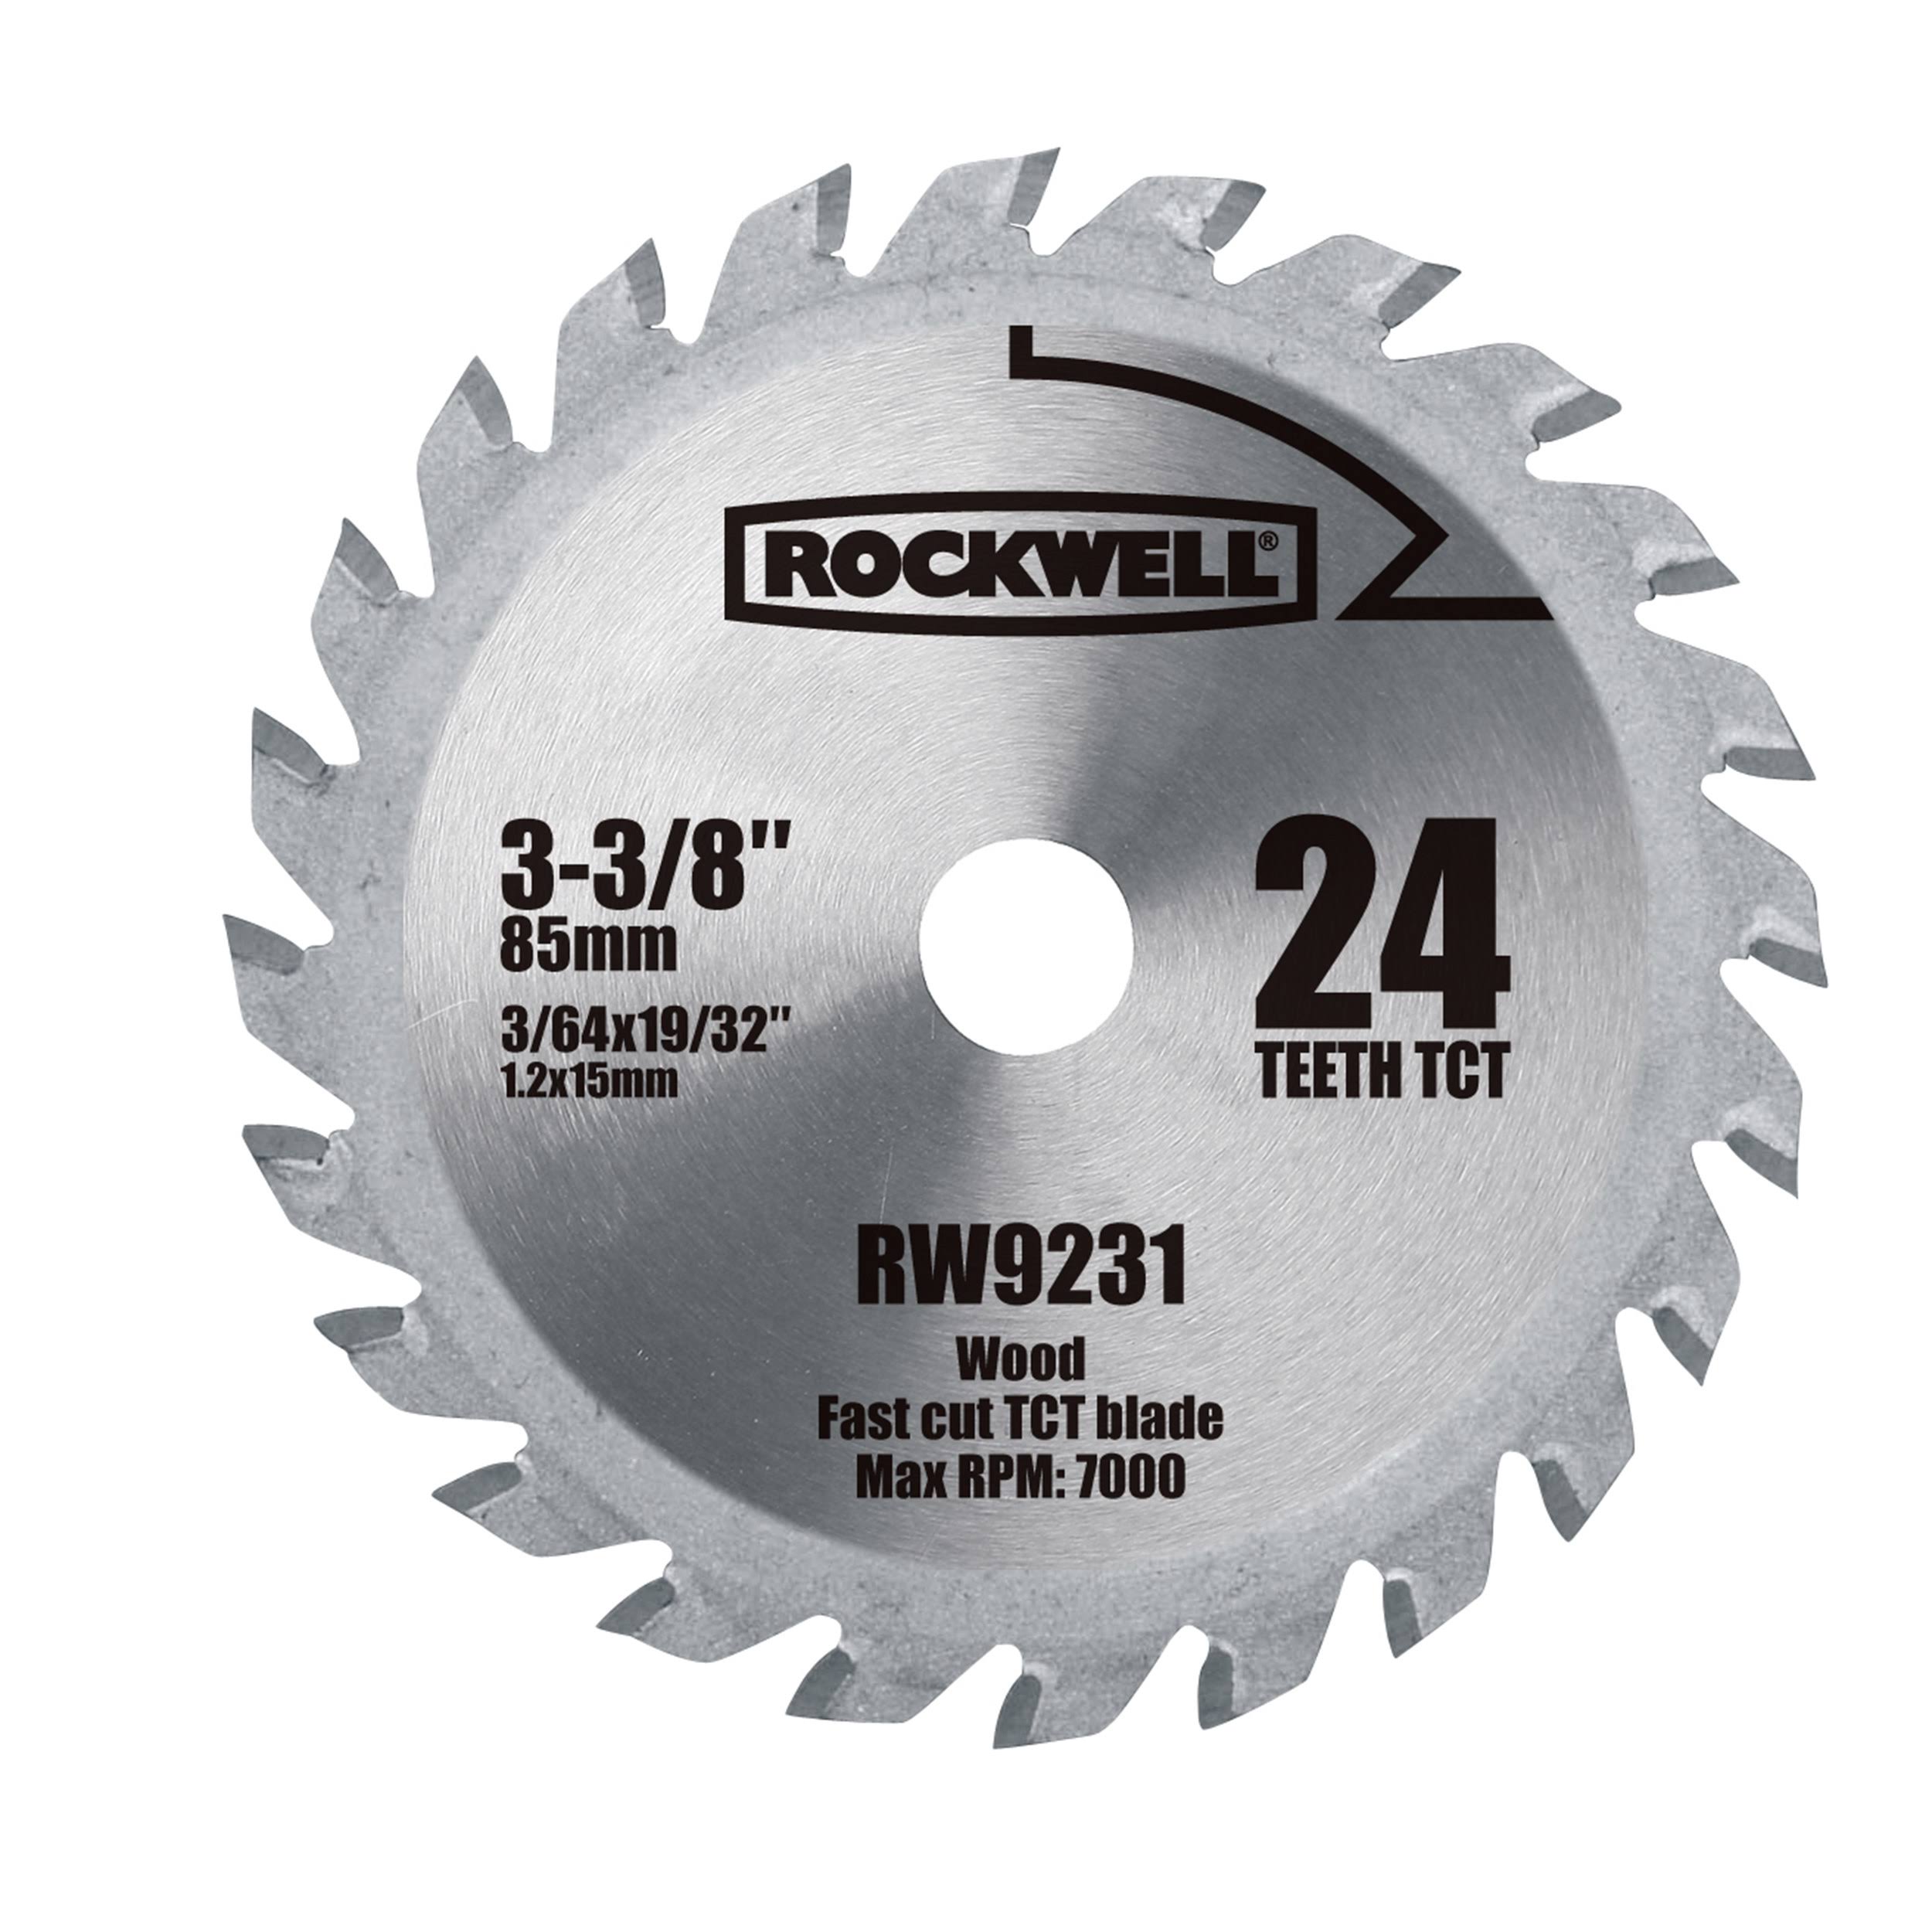 Rockwell RW9231 VersaCut Carbide-tipped Circular Saw Blade - 24T, 3 3/8"